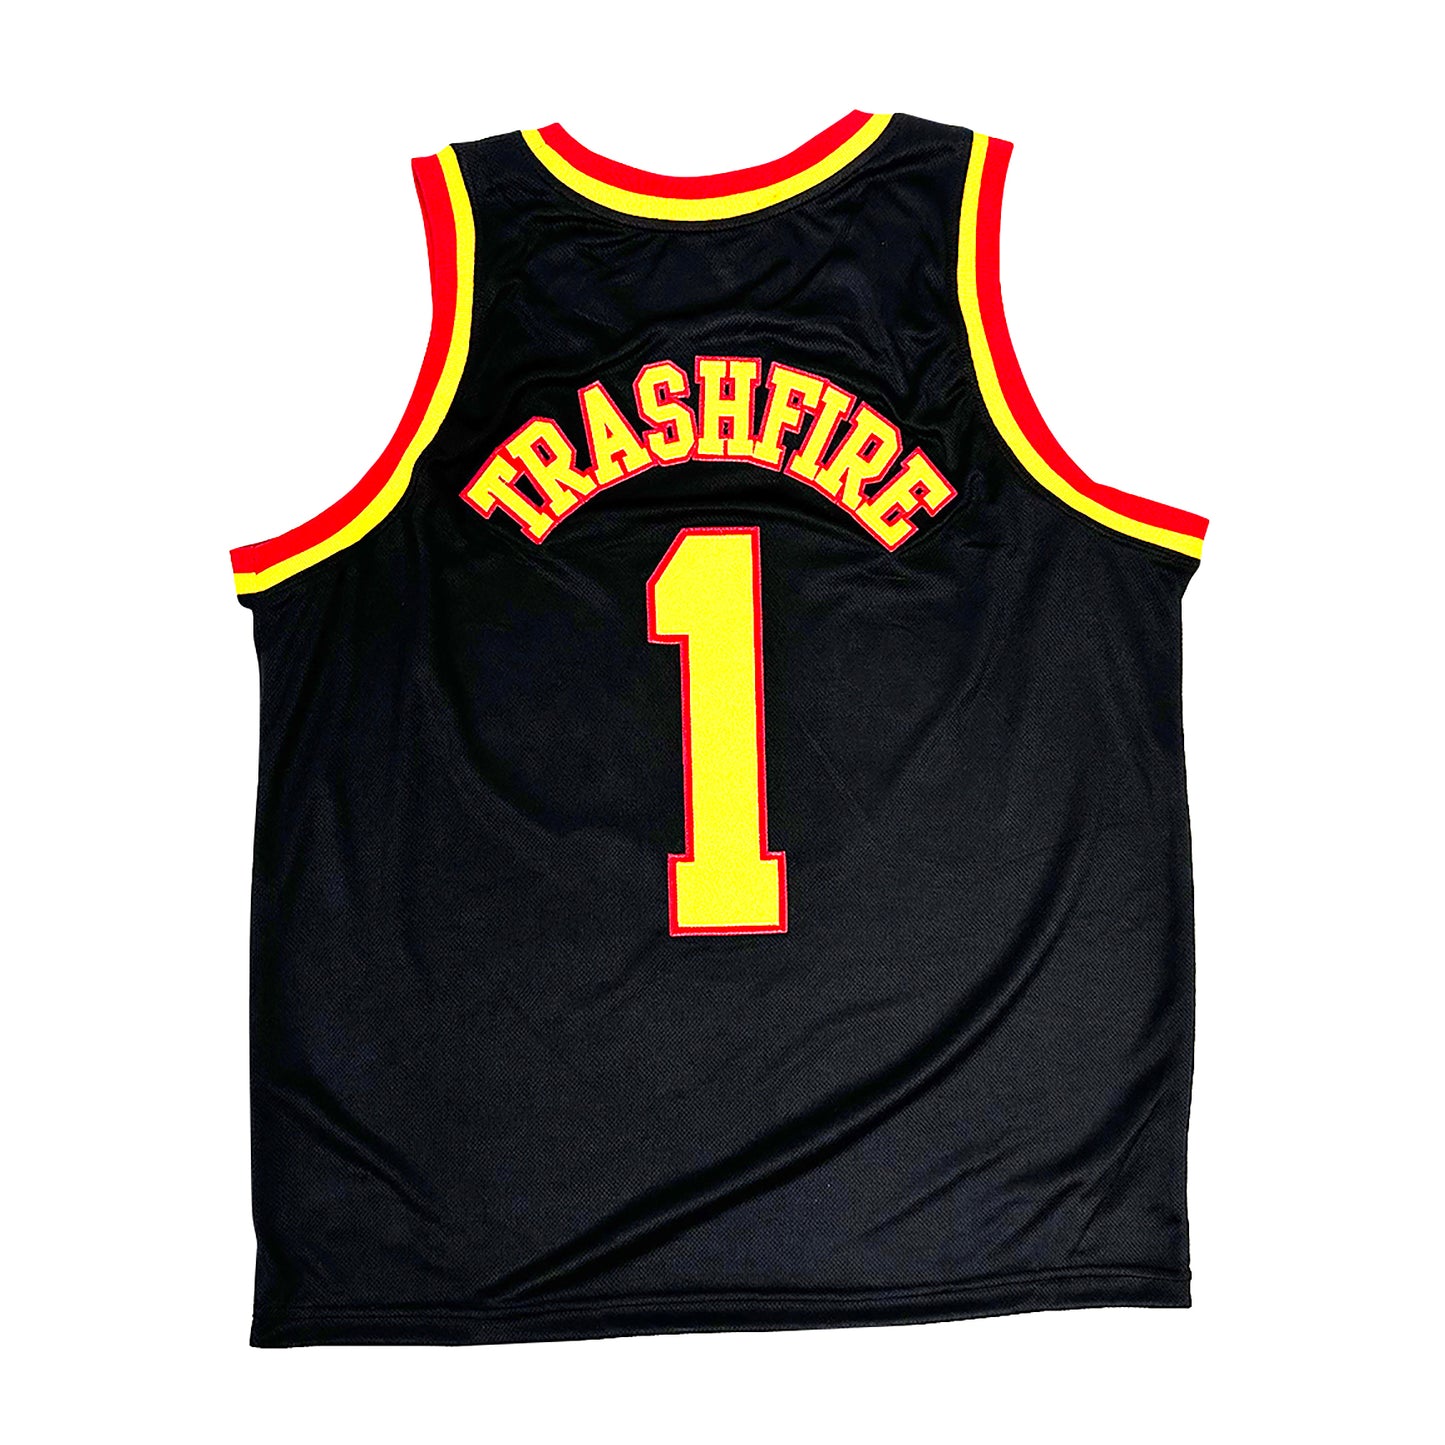 Official Ouija Macc Basketball jersey - Trashfire[RUNS SMALL ORDER A SIZE UP]